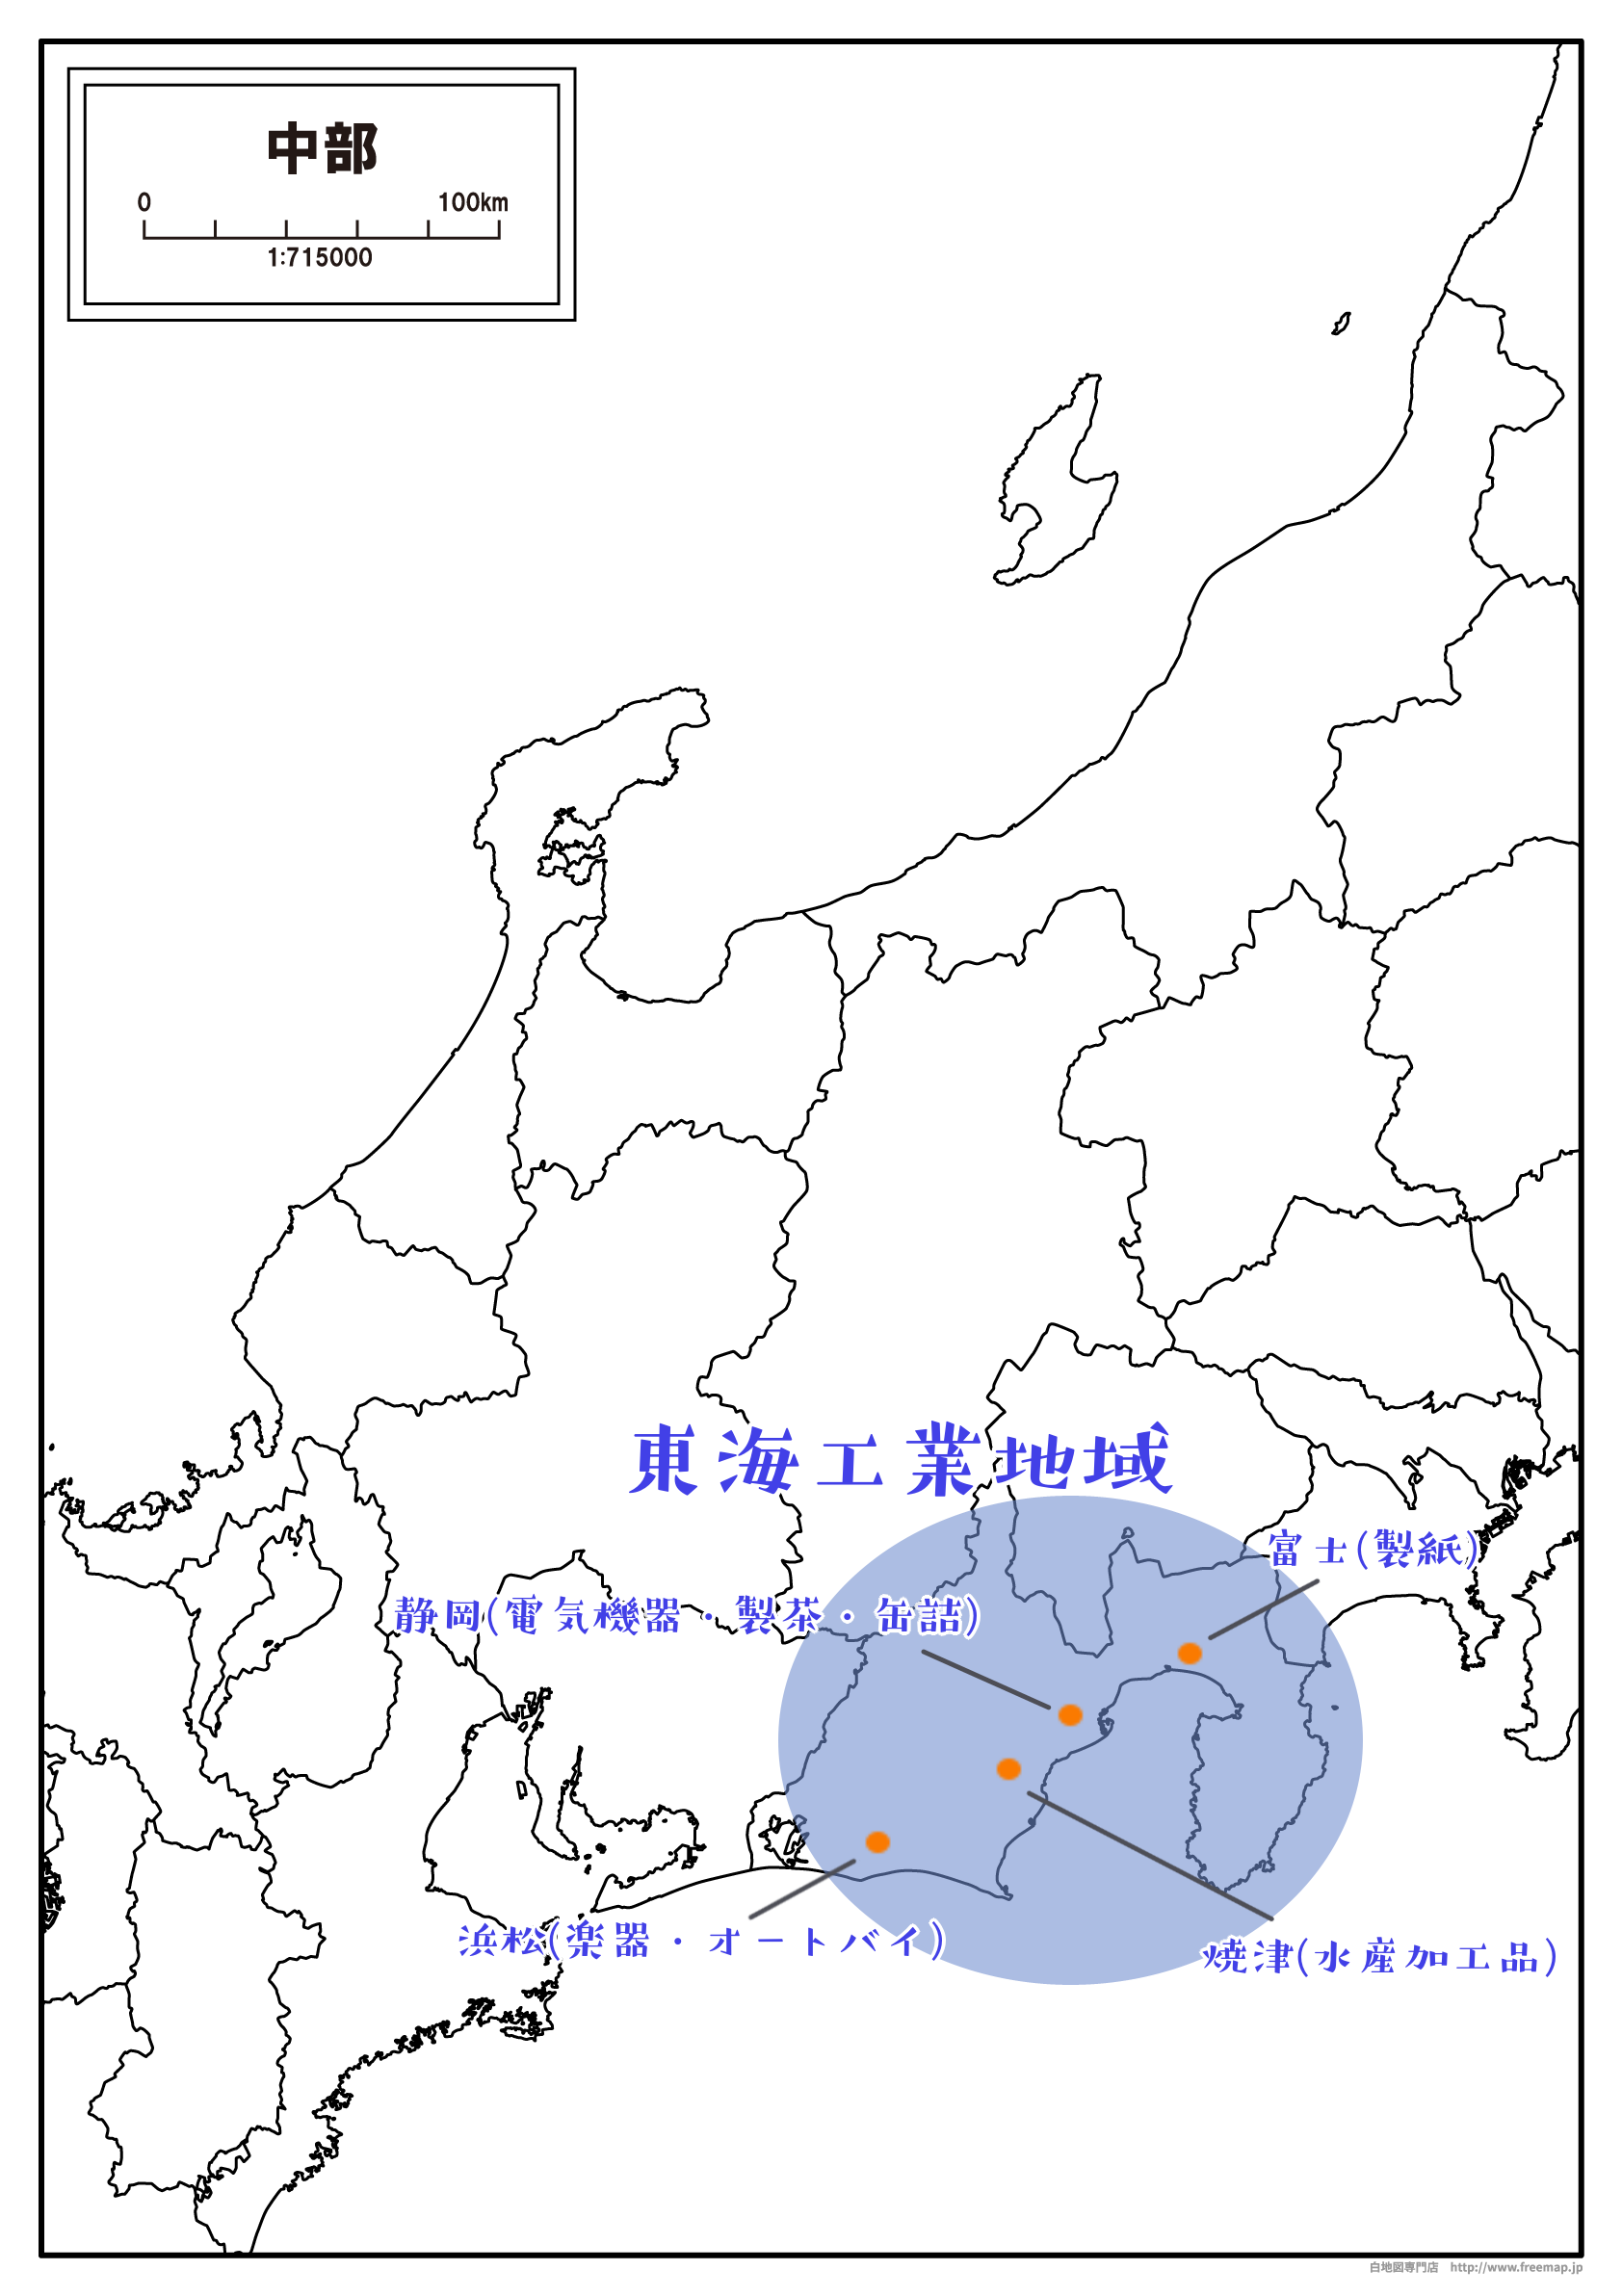 東海工業地域の地図上の位置